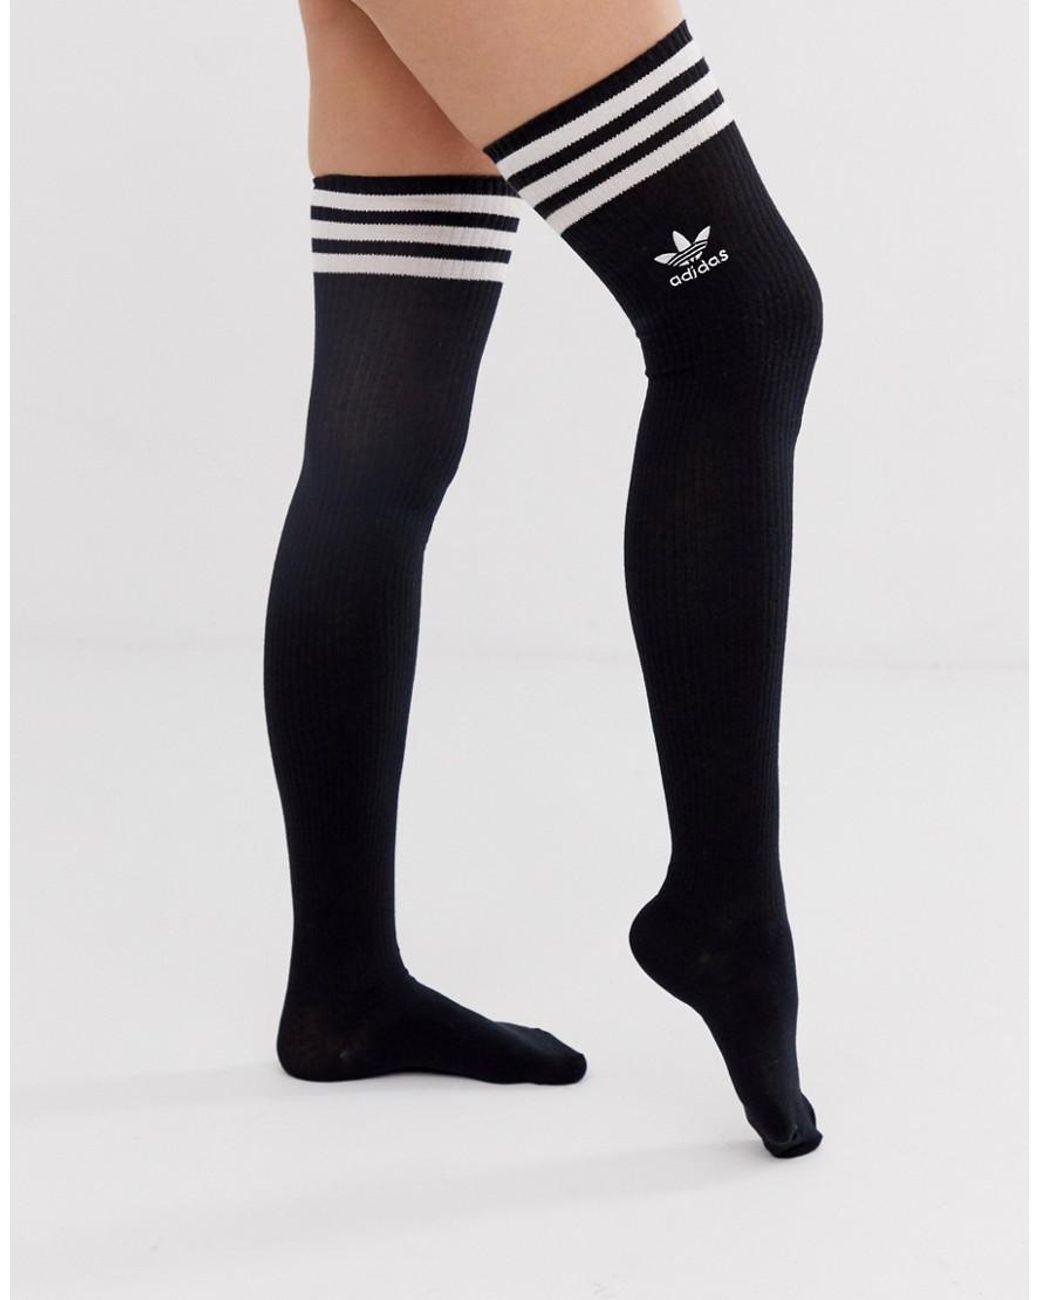 adidas Originals Three Stripe Knee High Socks Black